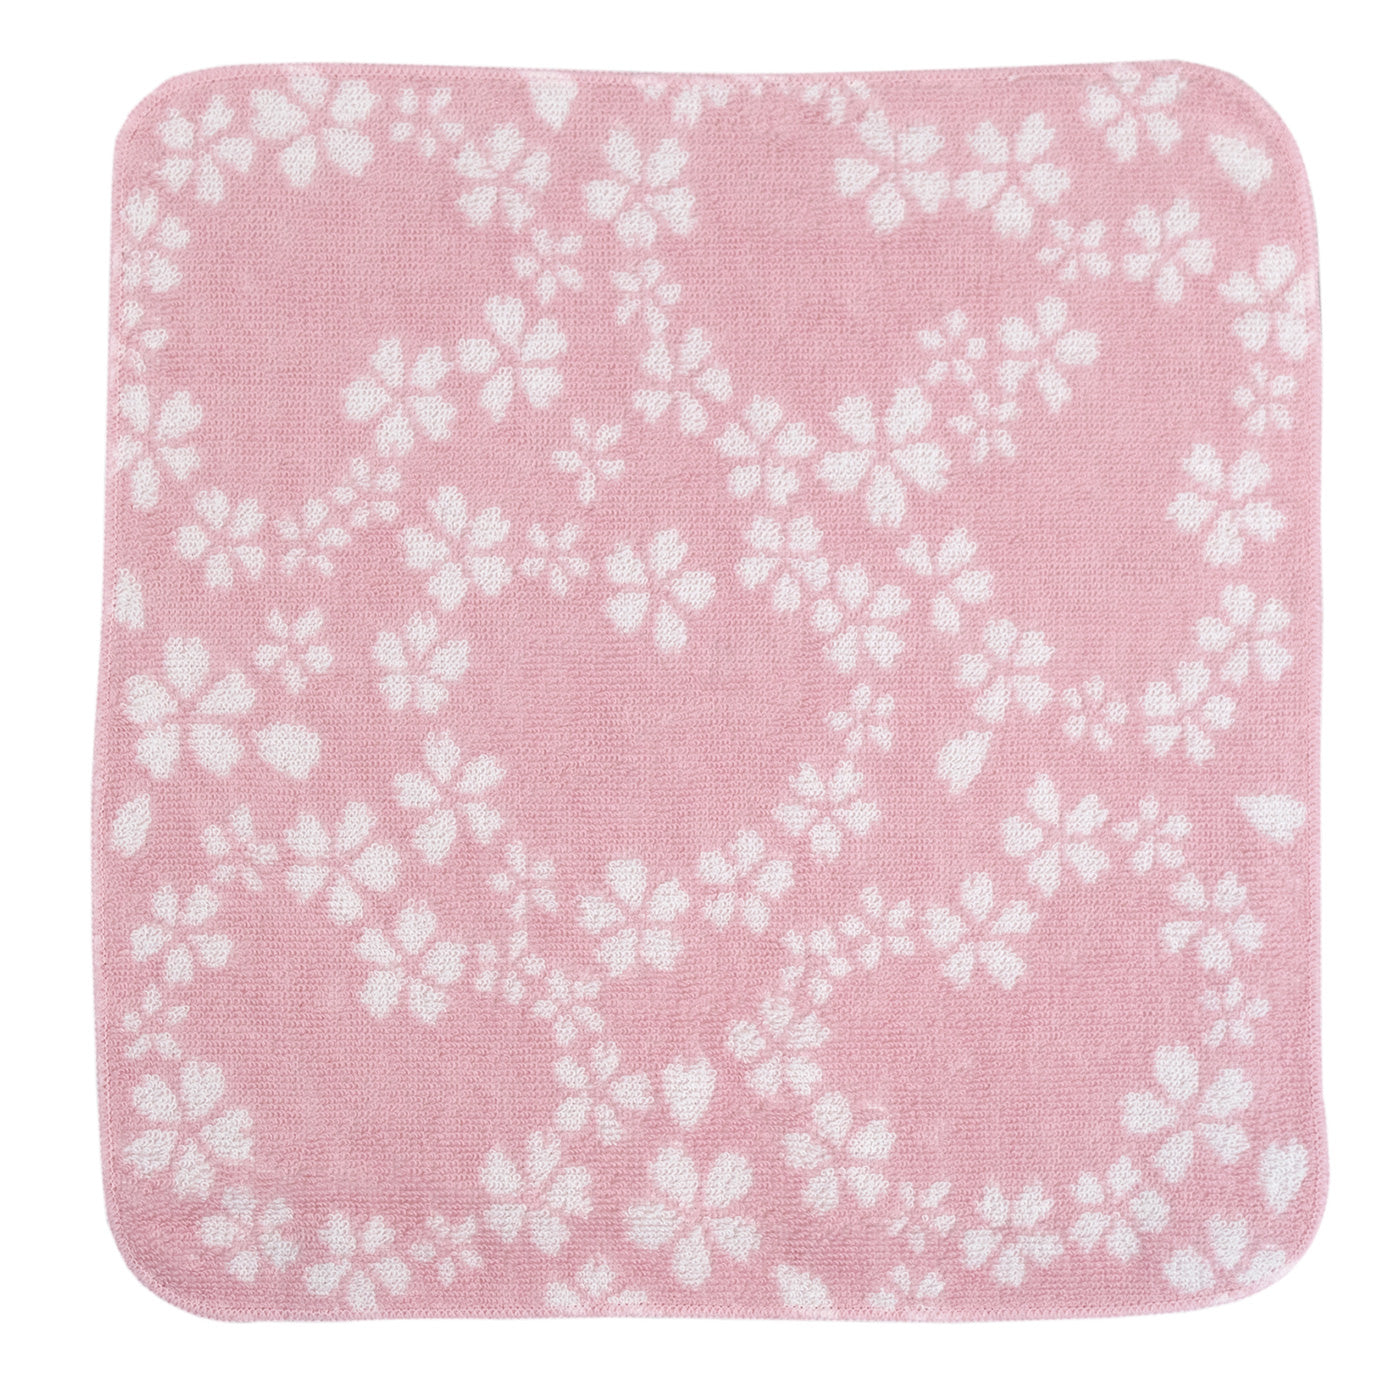 FORTUNA Tokyo Imabari Handkerchief Sakura Cherry Blossoms Design Mini Towel Cotton 100%, Made in Japan FORTUNA Tokyo